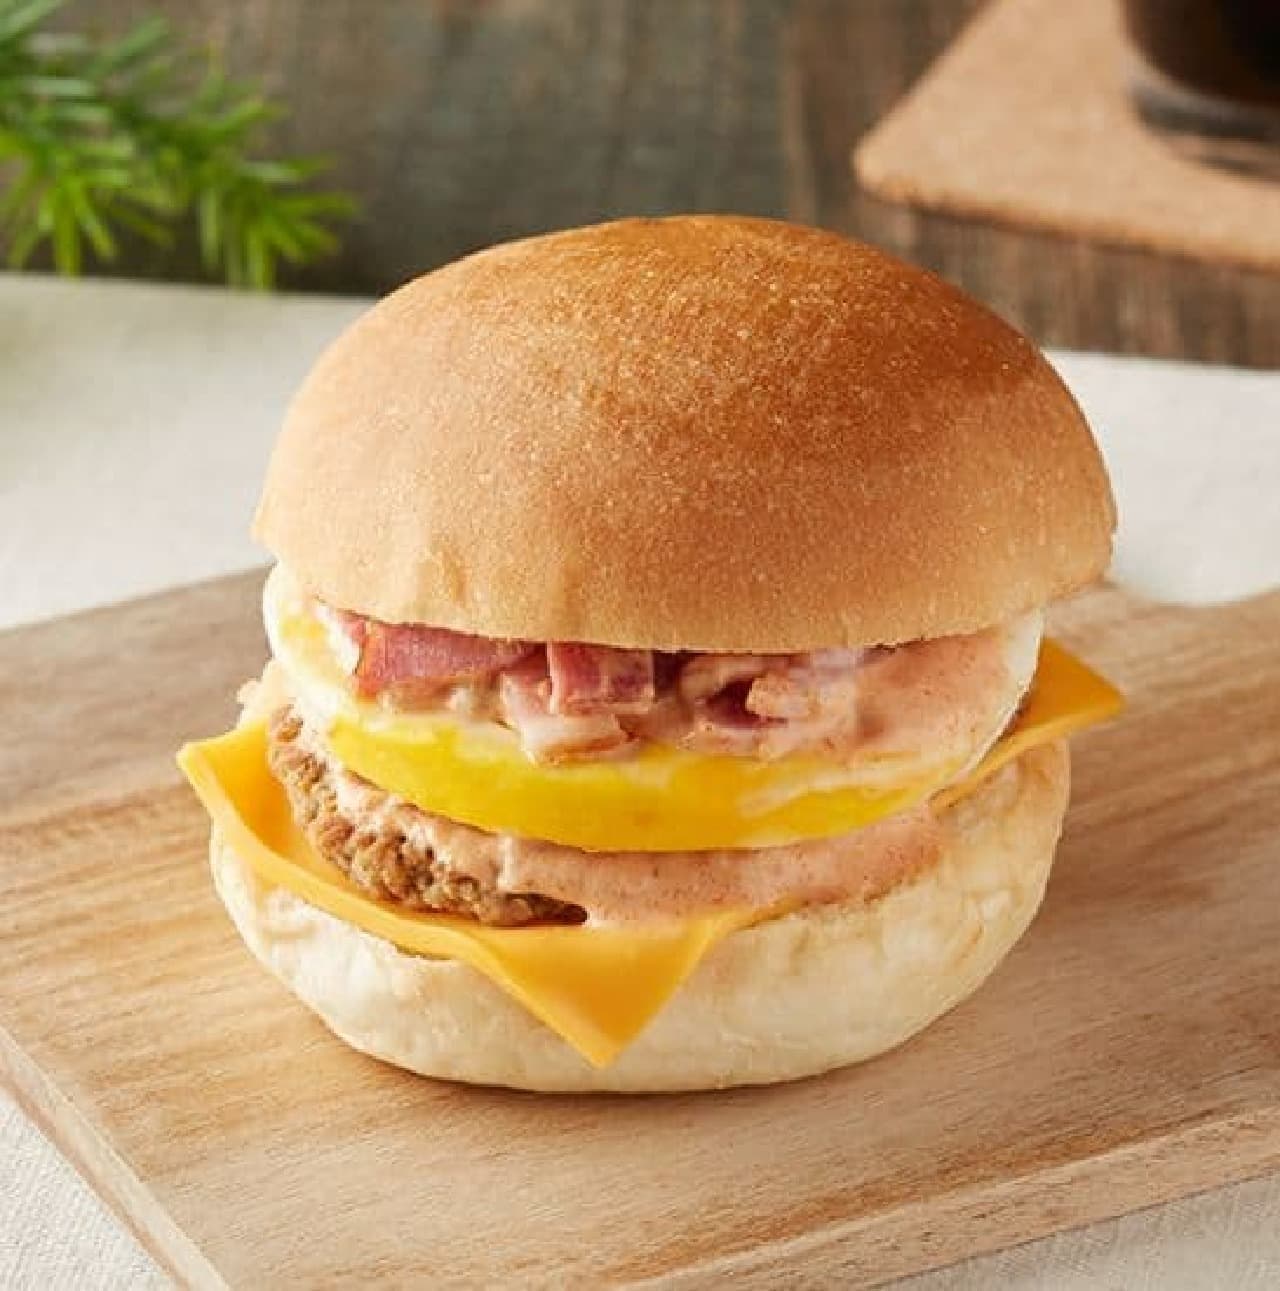 FamilyMart "Bacon and Egg Cheeseburger"